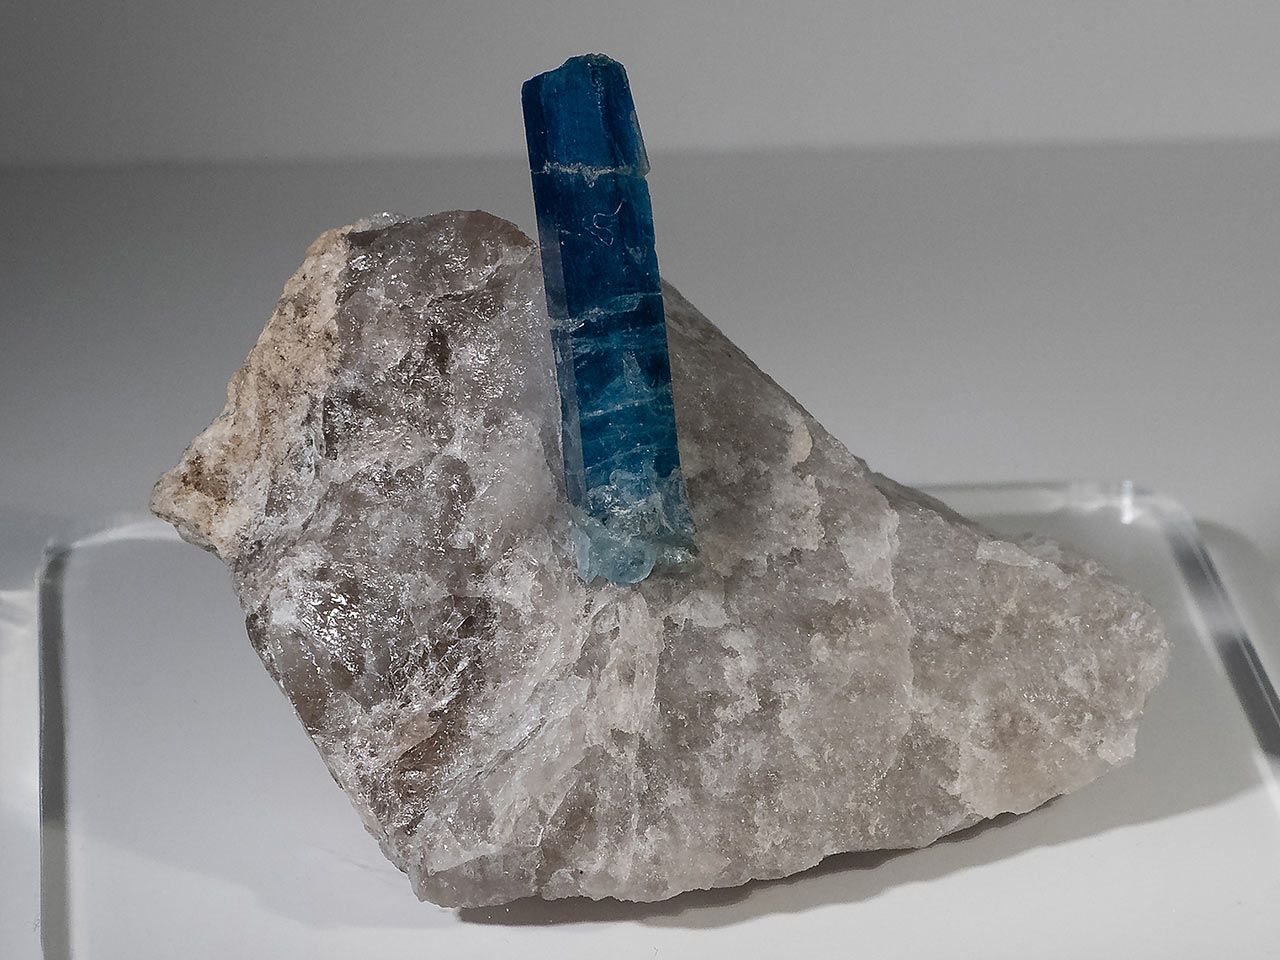 Deep blue aquamarine in the quartz matrix from the Untersulzbachtal, Hohe Tauern, Austria.